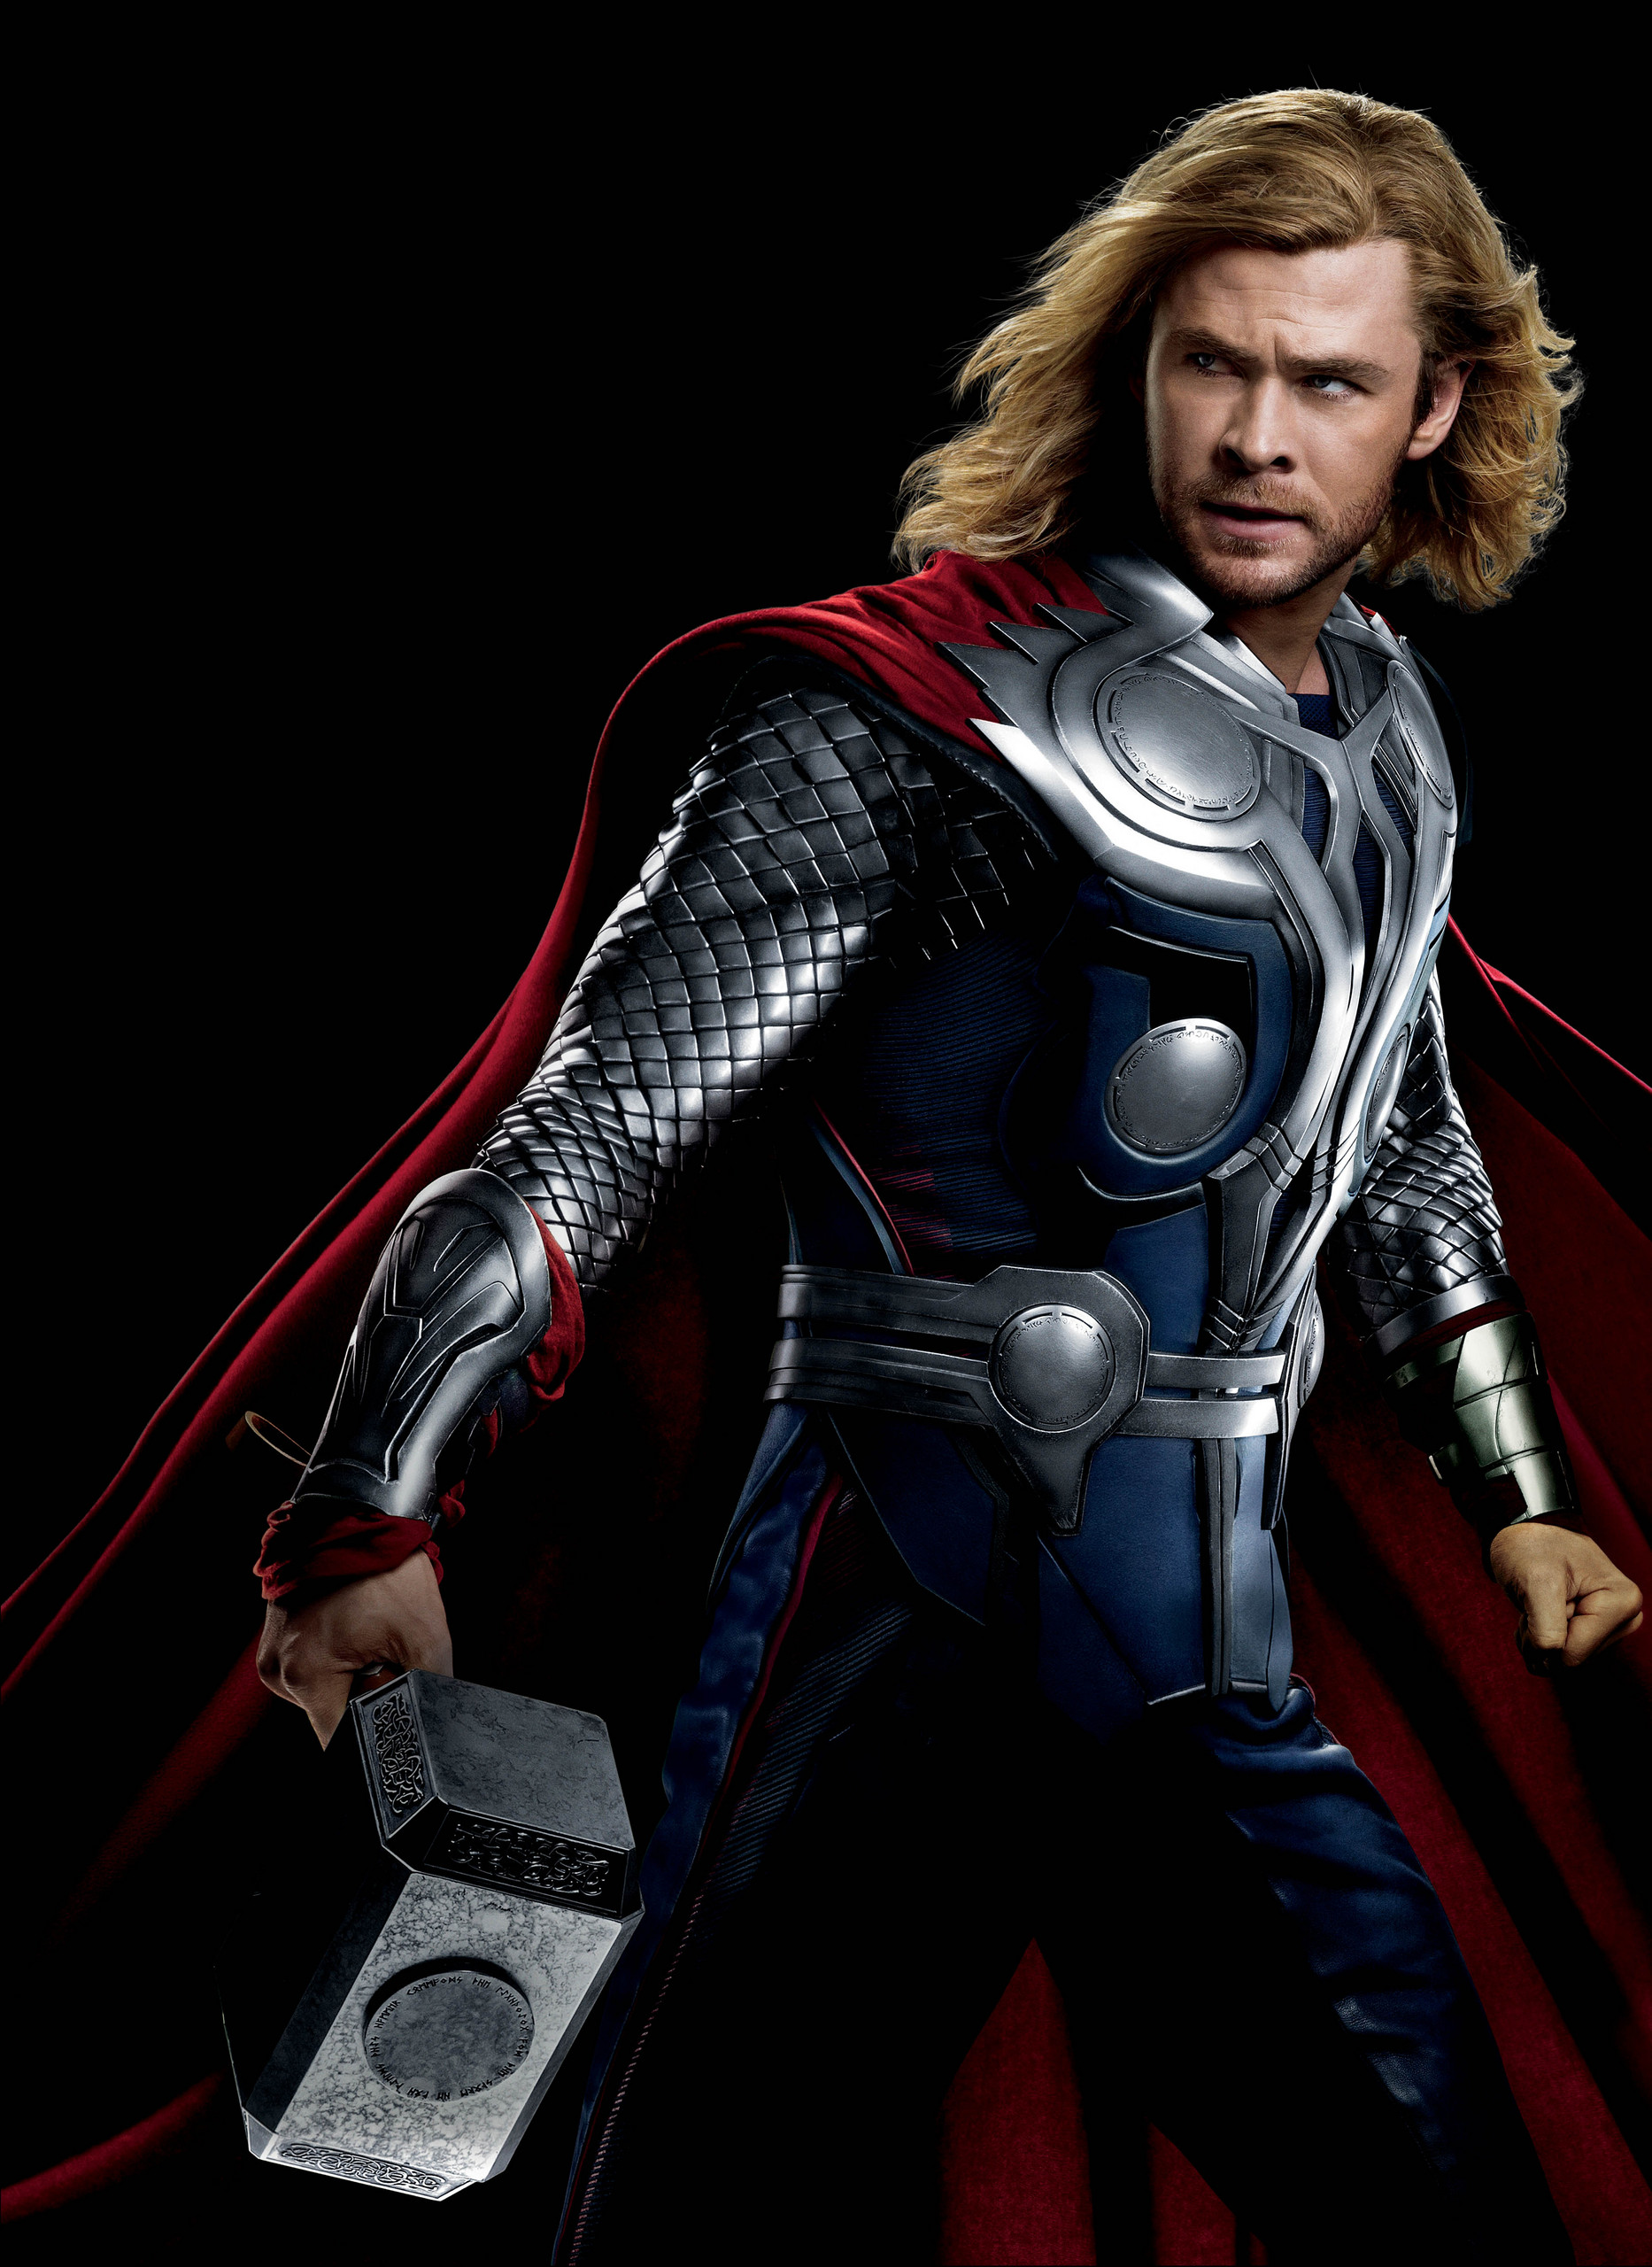 Thor   The Avengers Photo 29489278 1866x2560